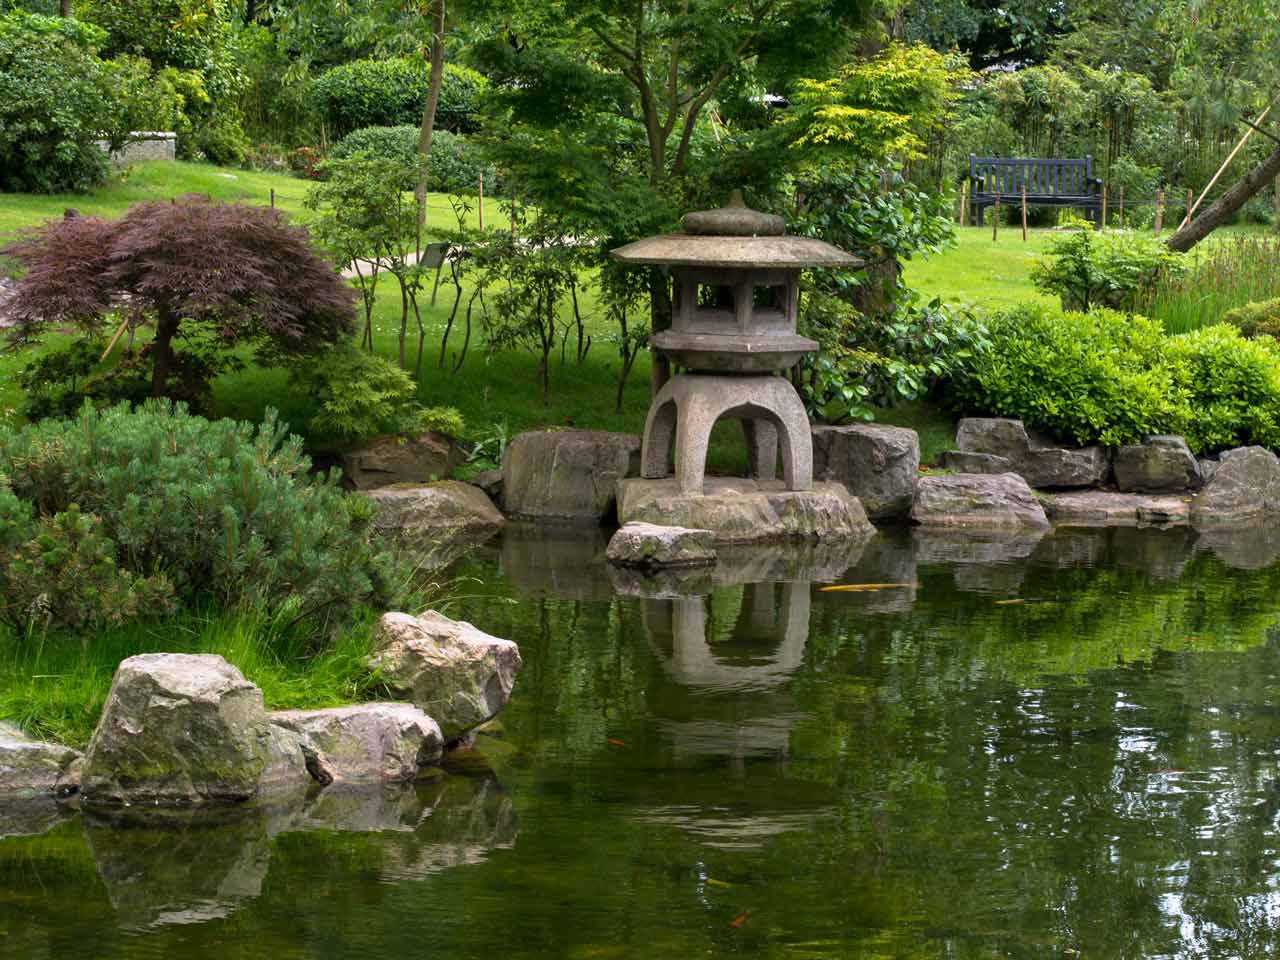 Japanese Garden Images